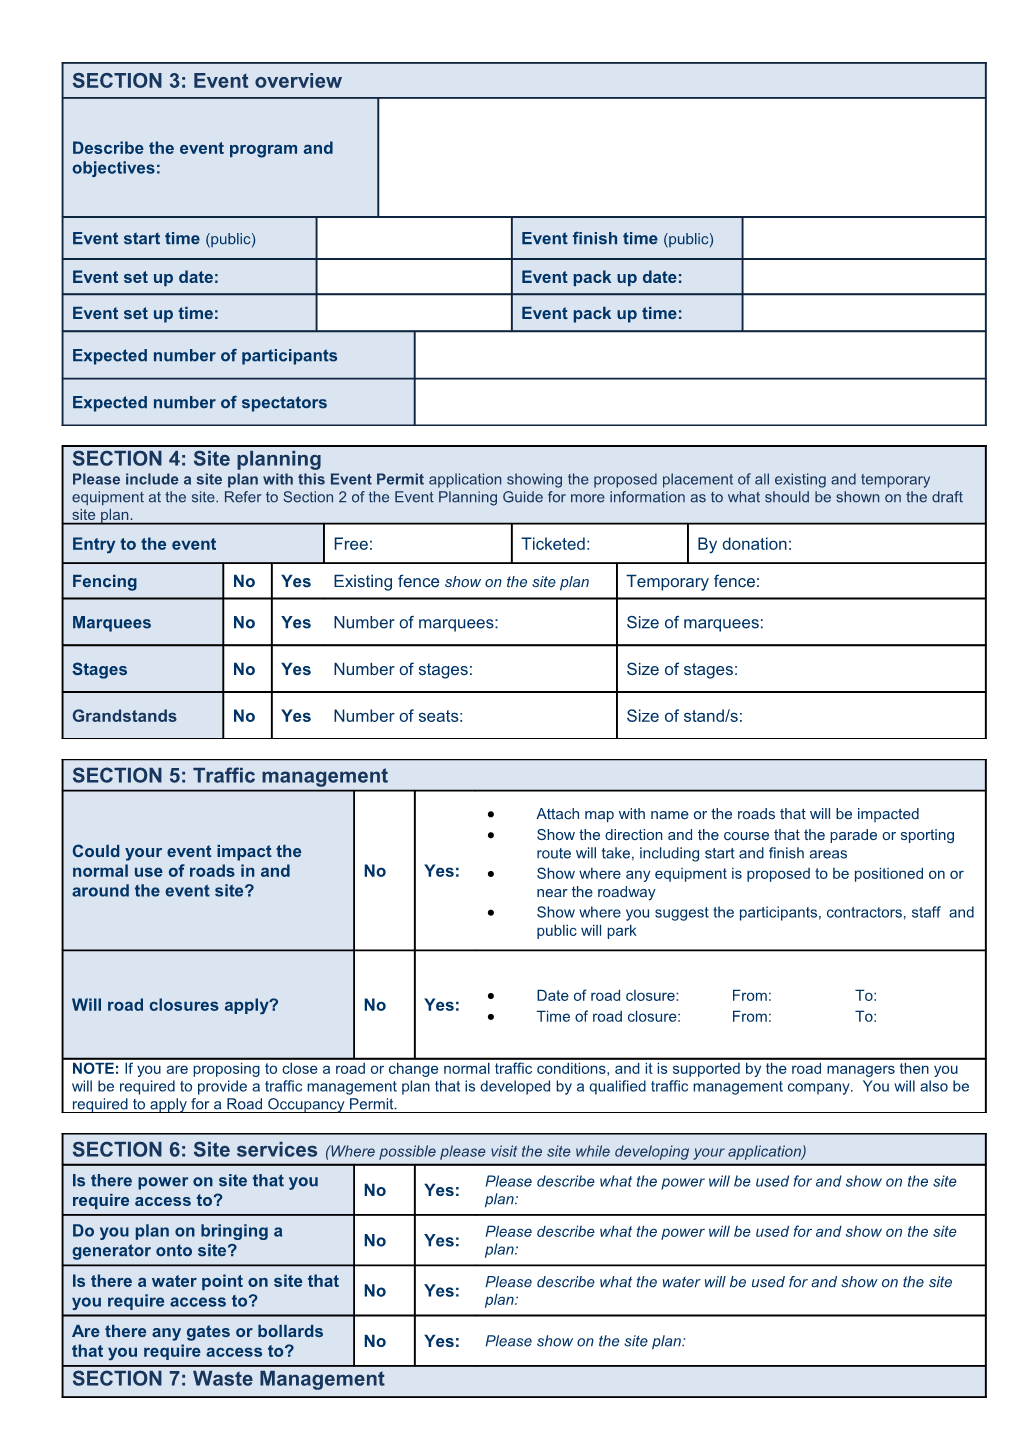 2016 Event Permit Application Form